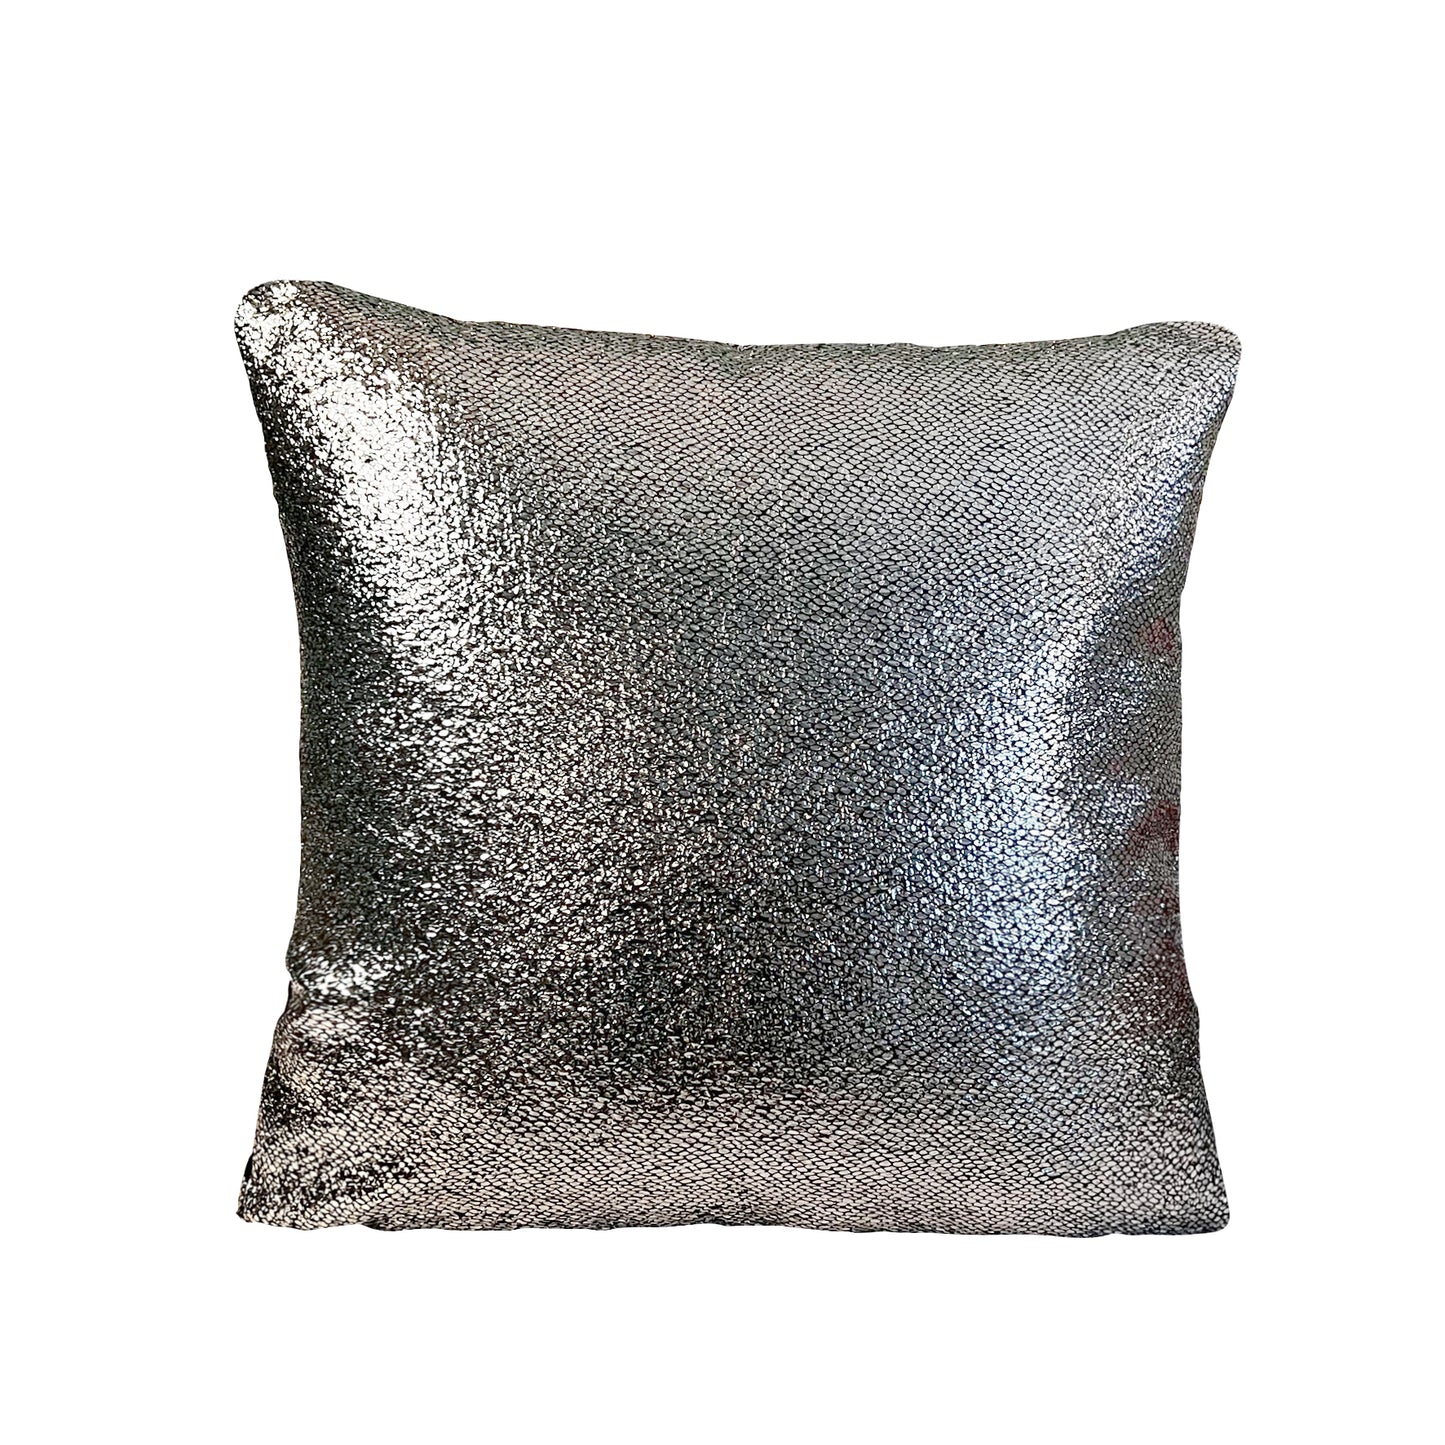 Marvelous Sparkle Pattern Decorative Accent Throw Pillow